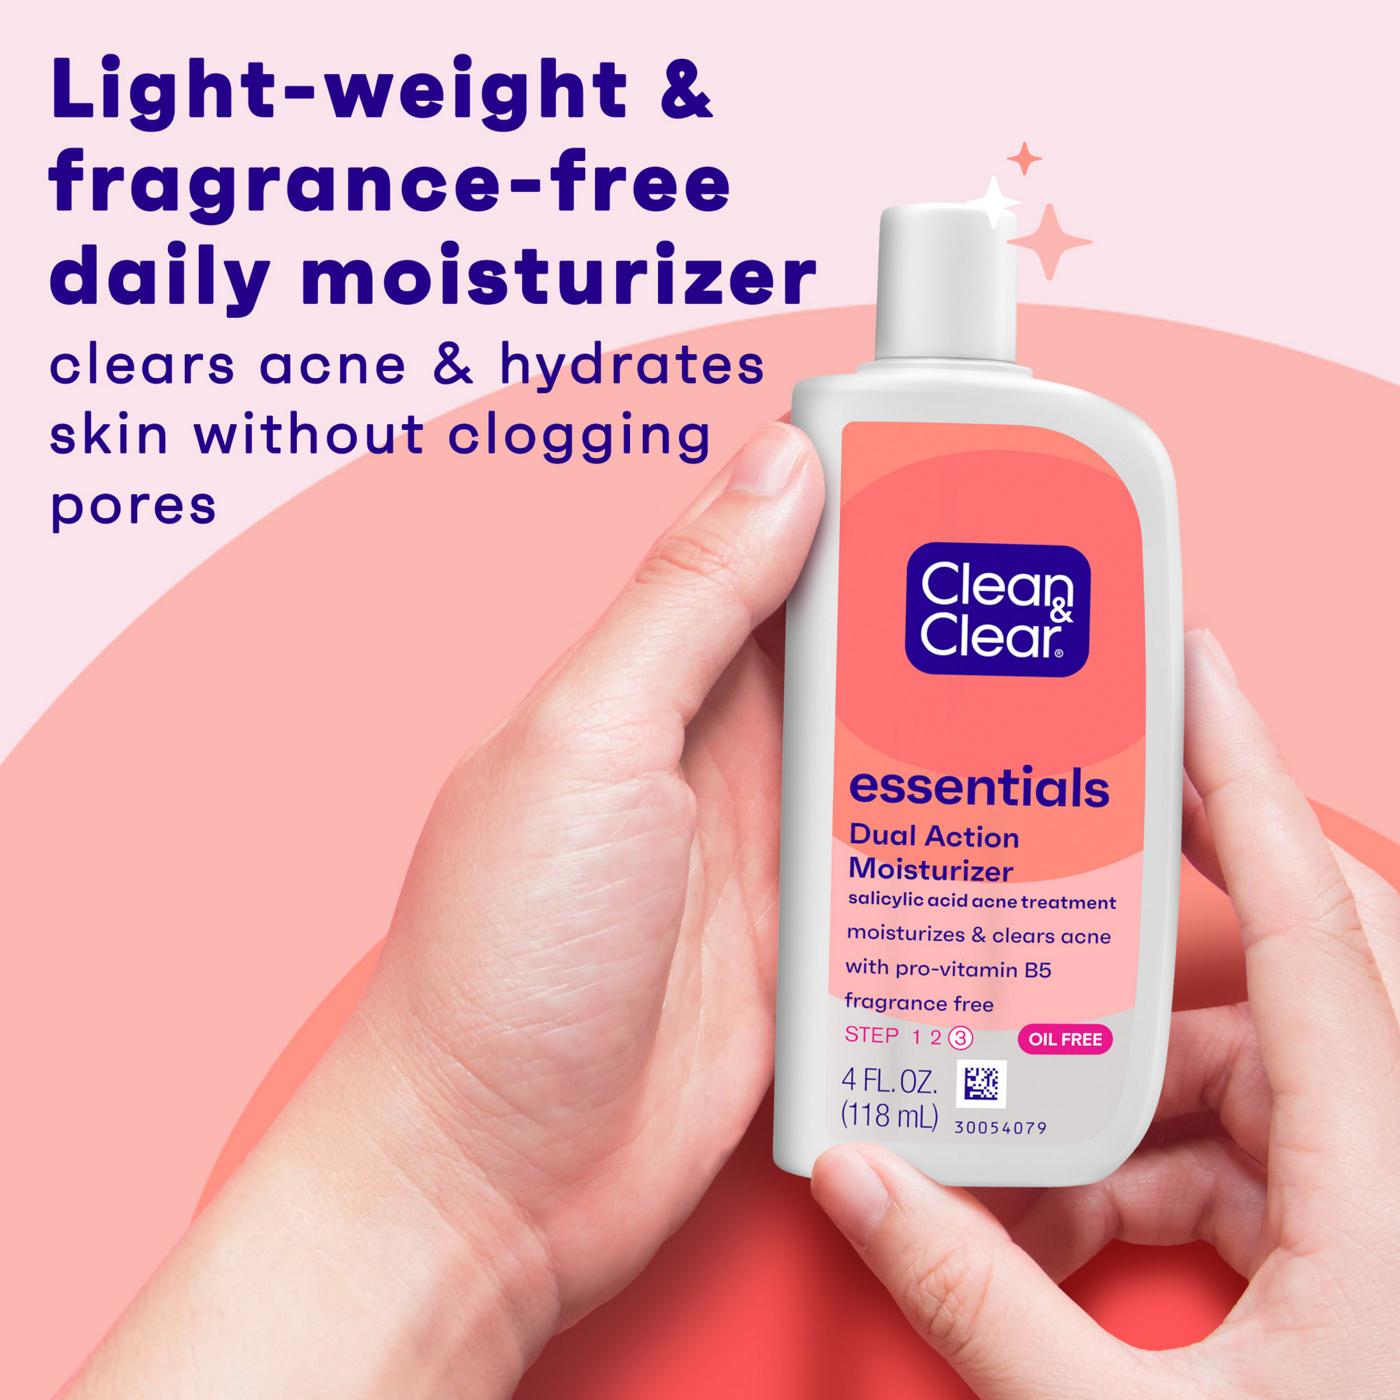 Clean & Clear ® dual action moisturizer